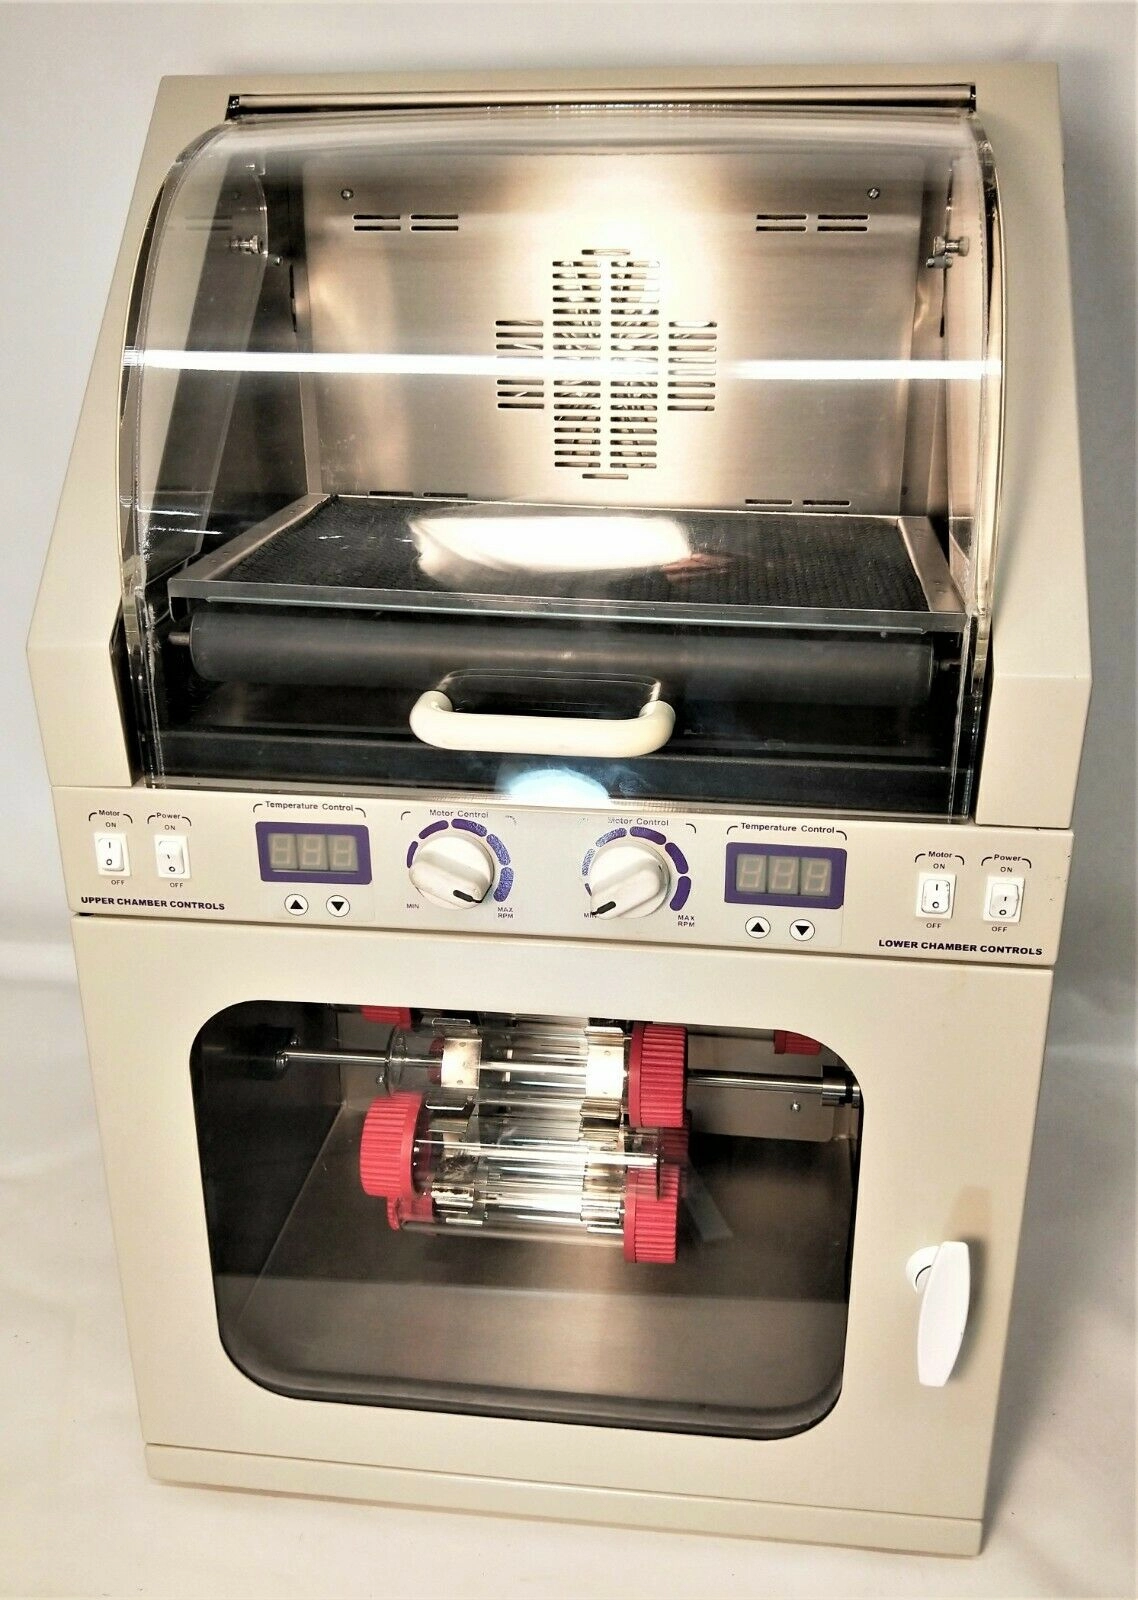 UVP Multidizer HM-4000 Hybridization Oven with Roller Assembly